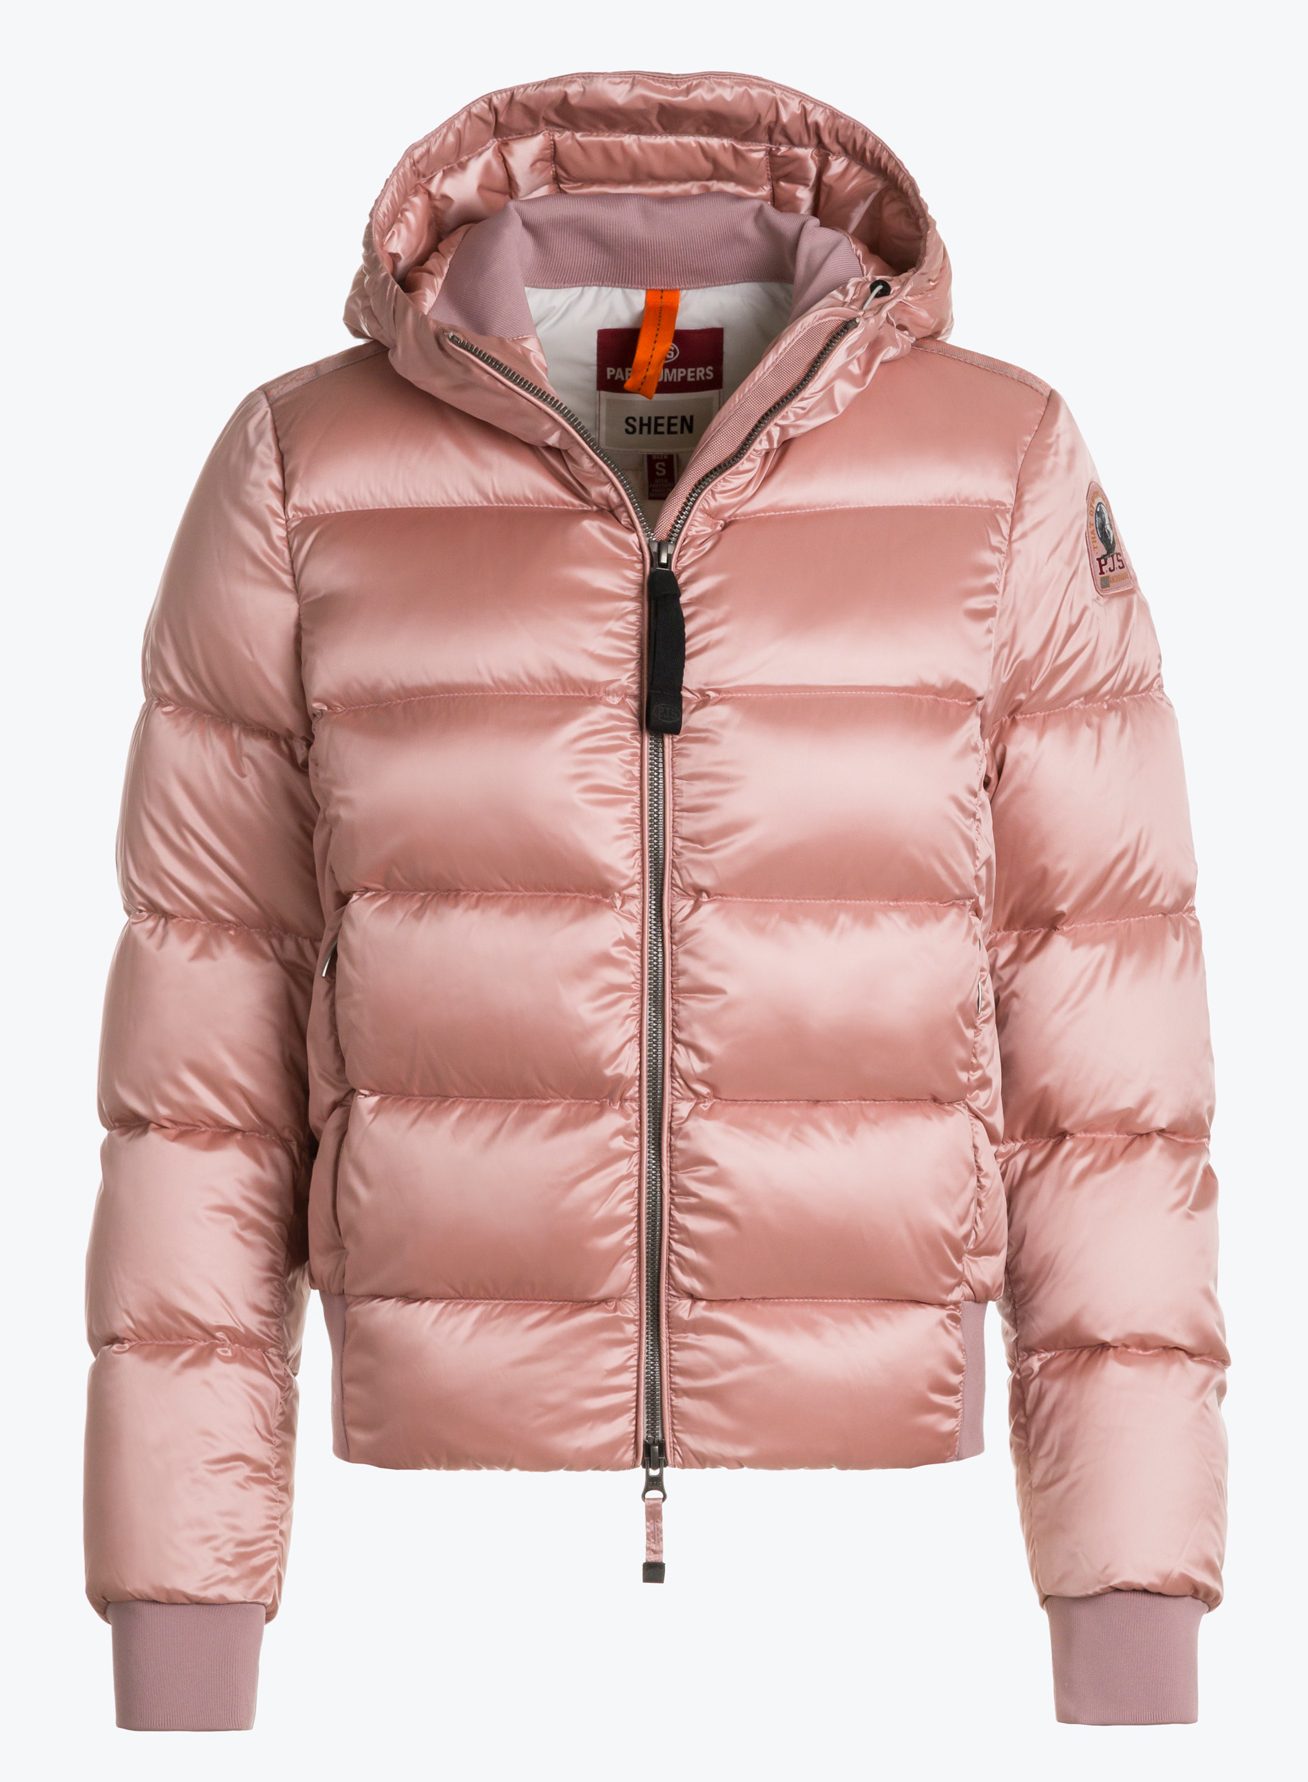 discount 93% WOMEN FASHION Jackets Bomber Multicolored XL NoName jacket 